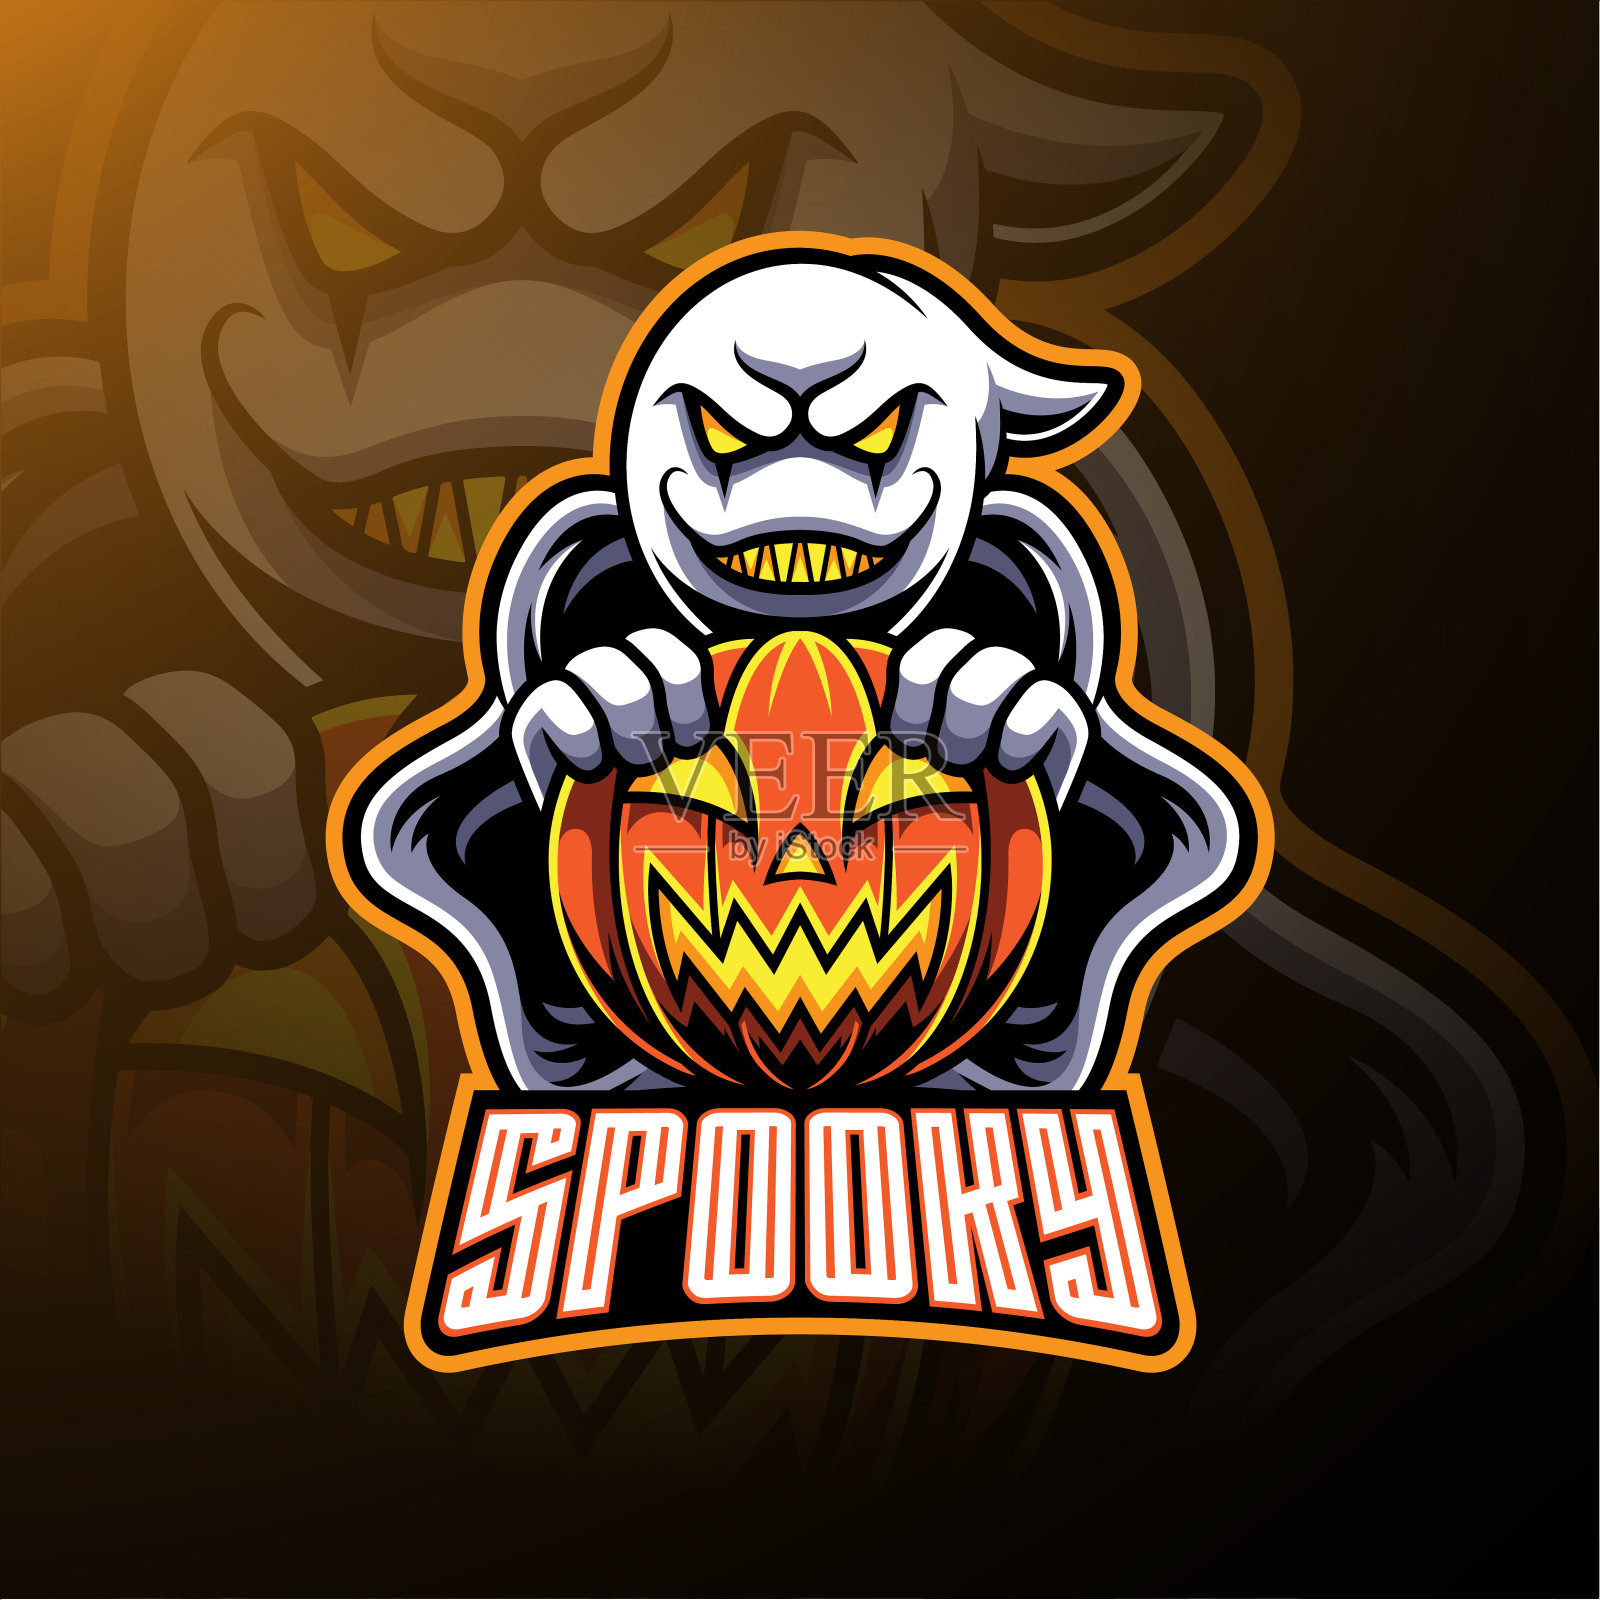 Spooky ghost and pumpkin logo mascot designs插画图片素材